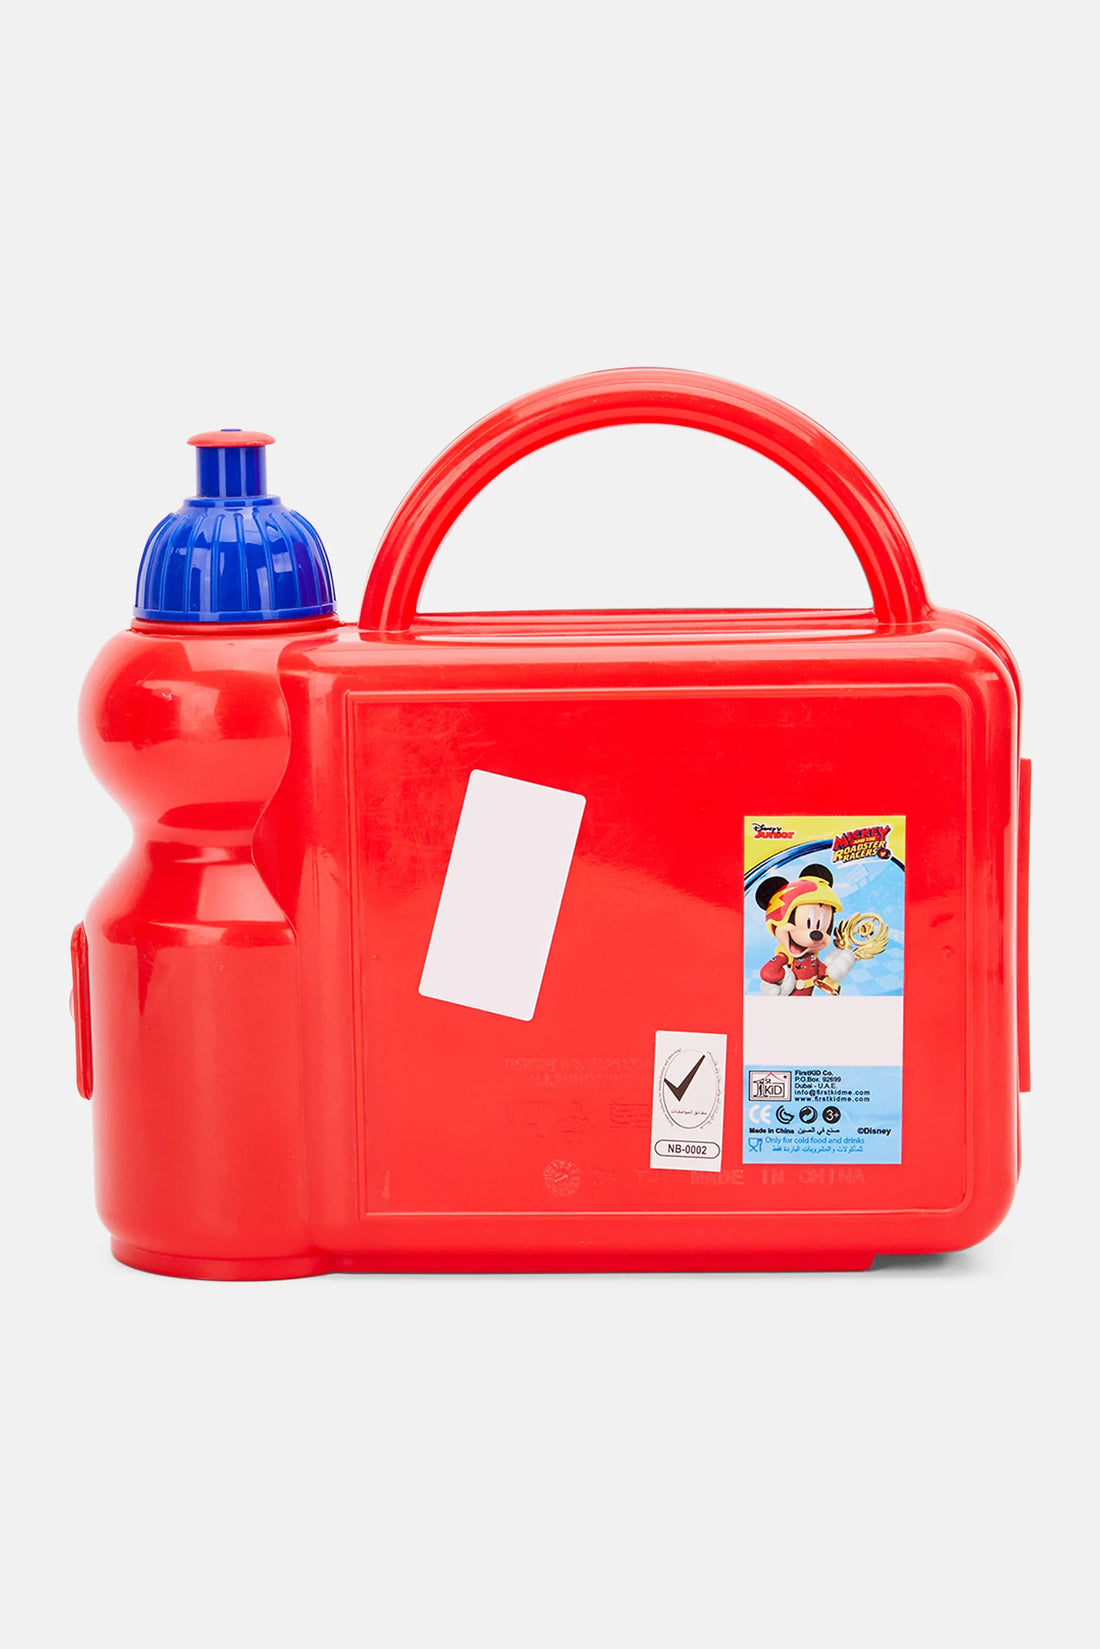 Disney Kids Boy Mickey Roadster Racers Lunch Box With Water Bottle 20 L x 14 H x 7 W cm Red